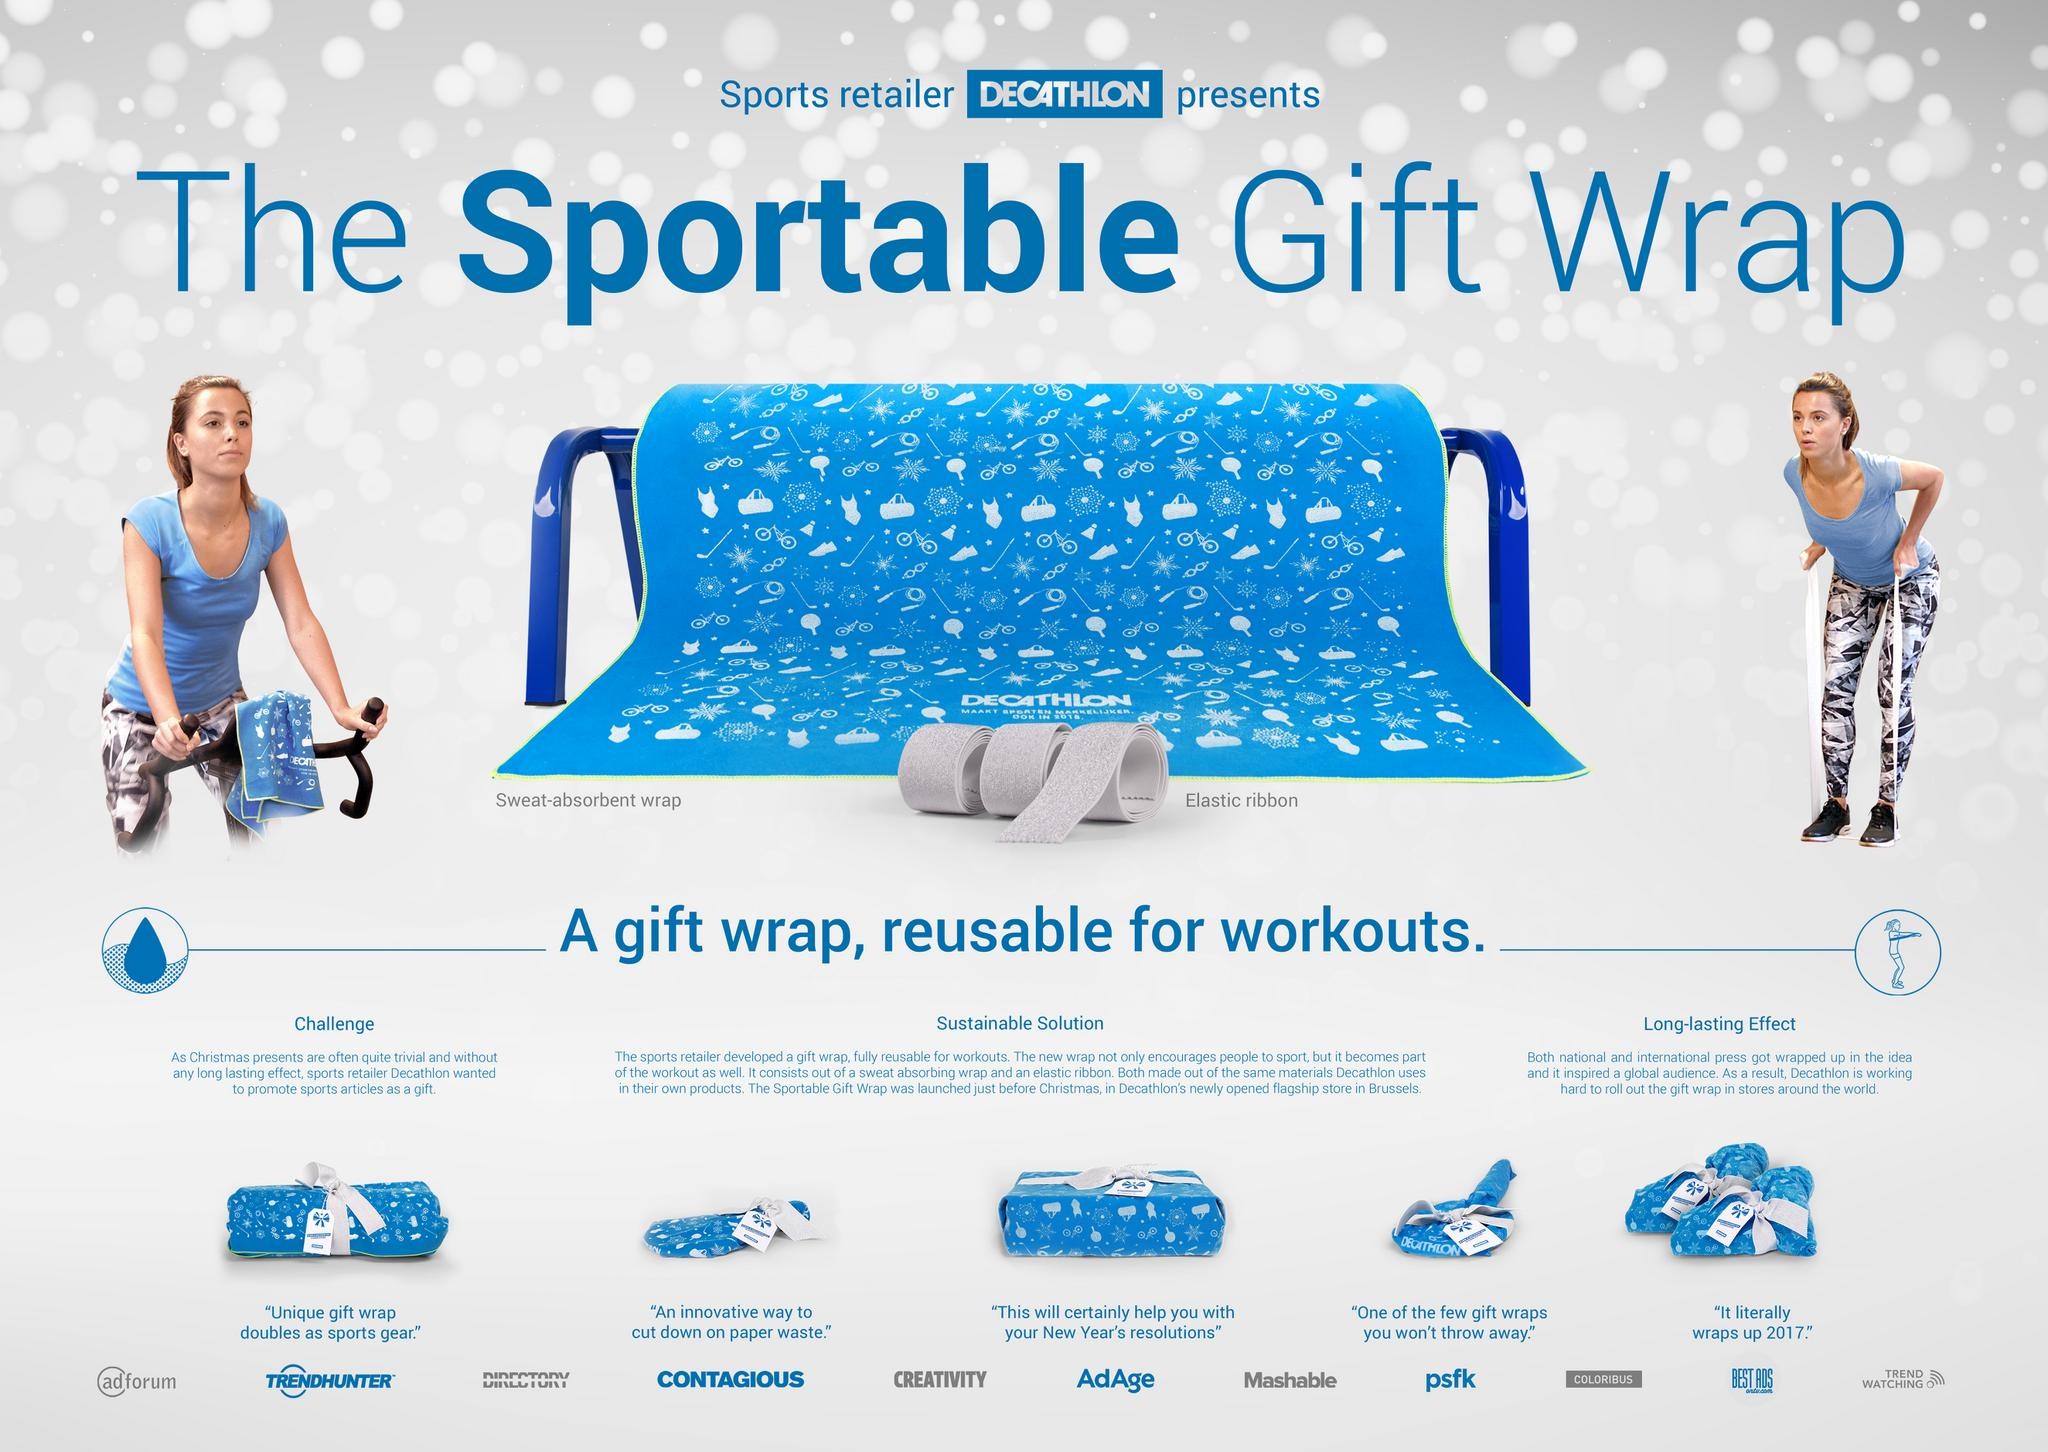 The Sportable Gift Wrap